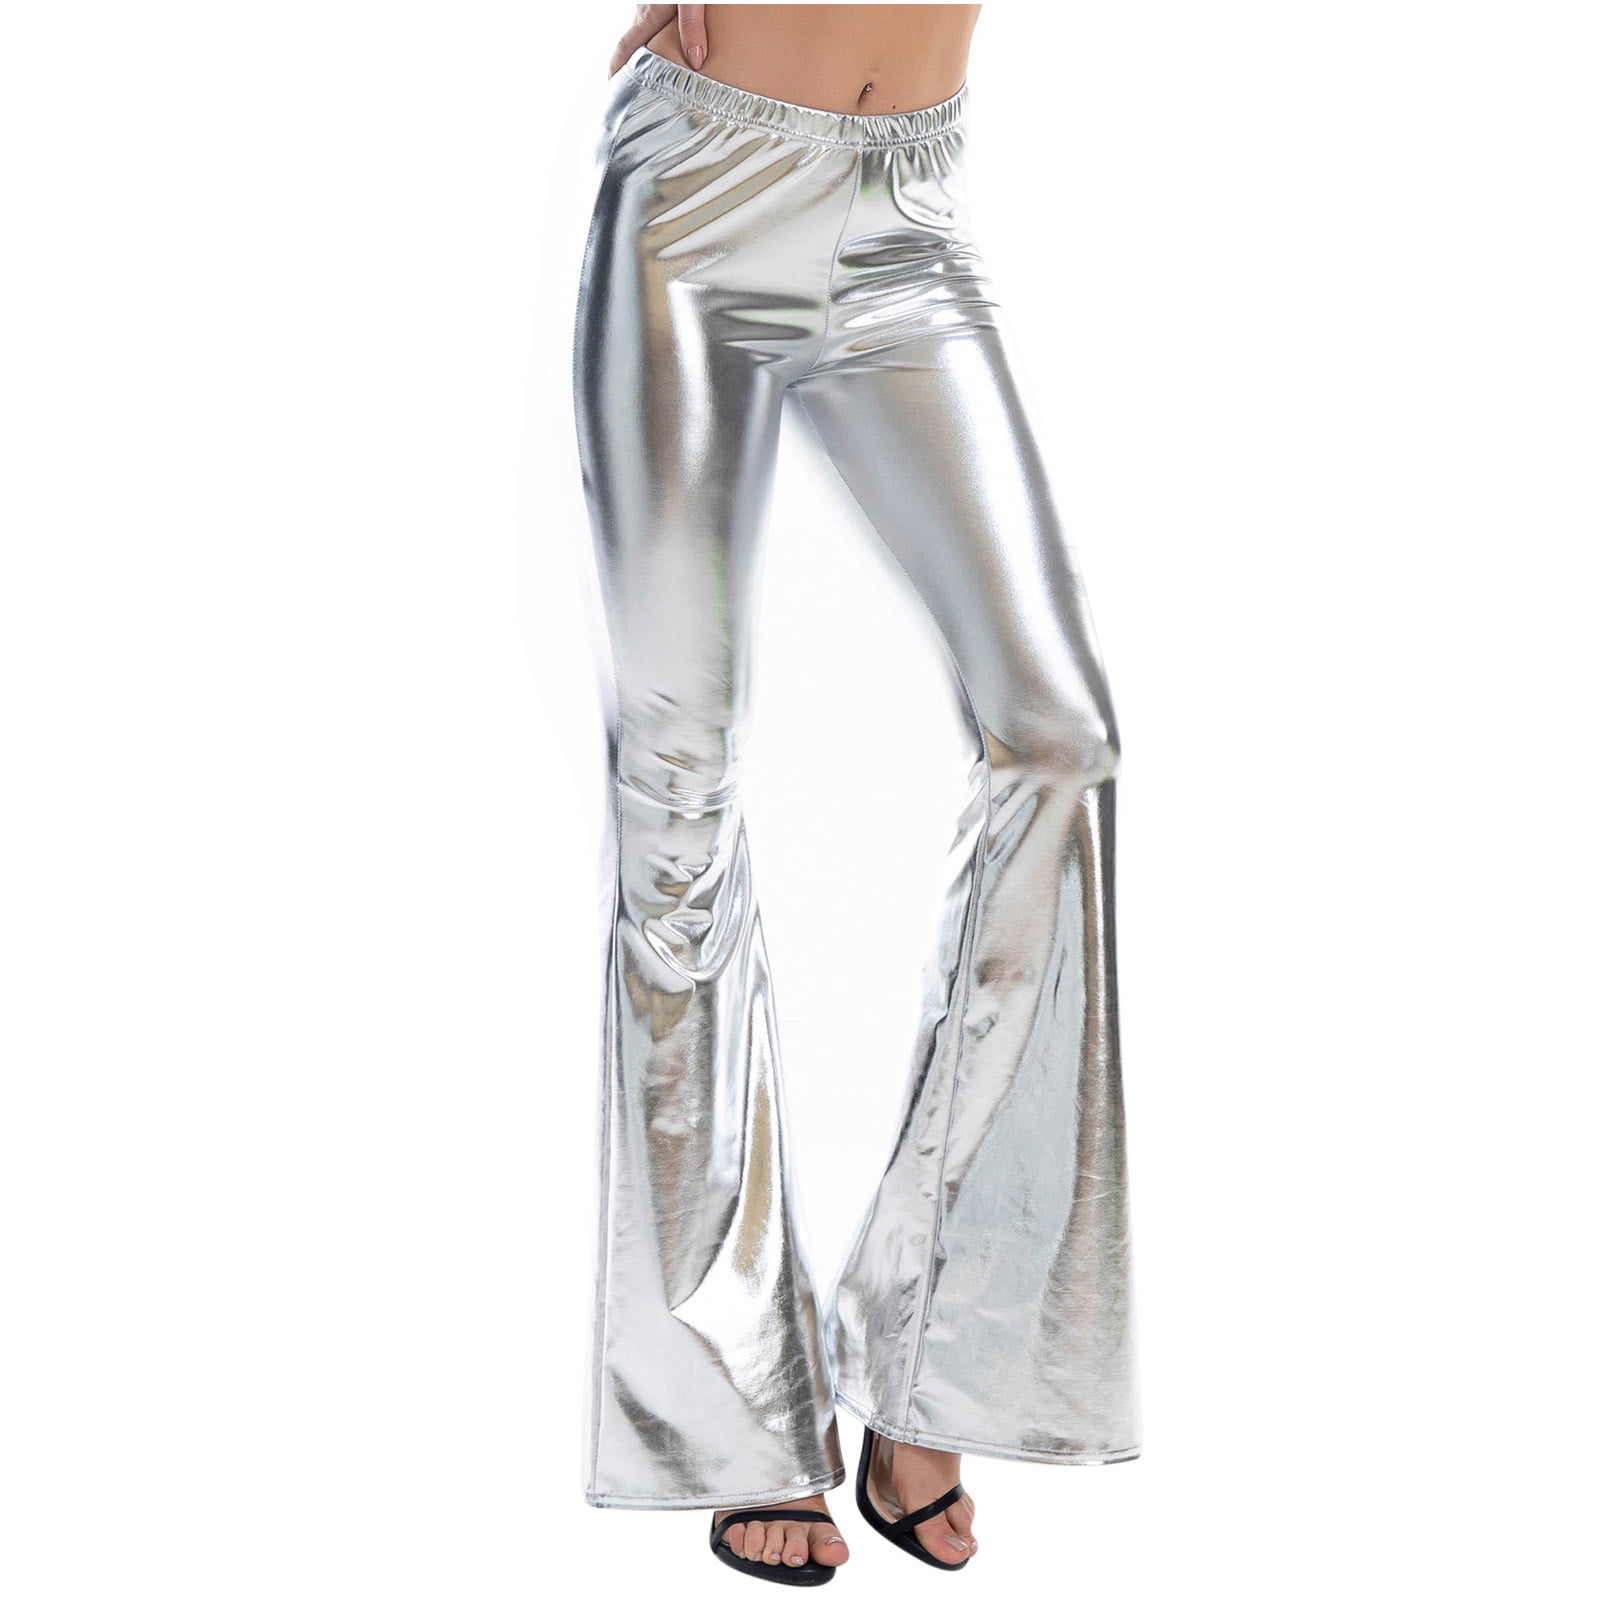 Buy Silver Metallic Leggings. Disco Leggings. Shiny Leggings. Faux Leather  Leggings. High Waist. Online in India 